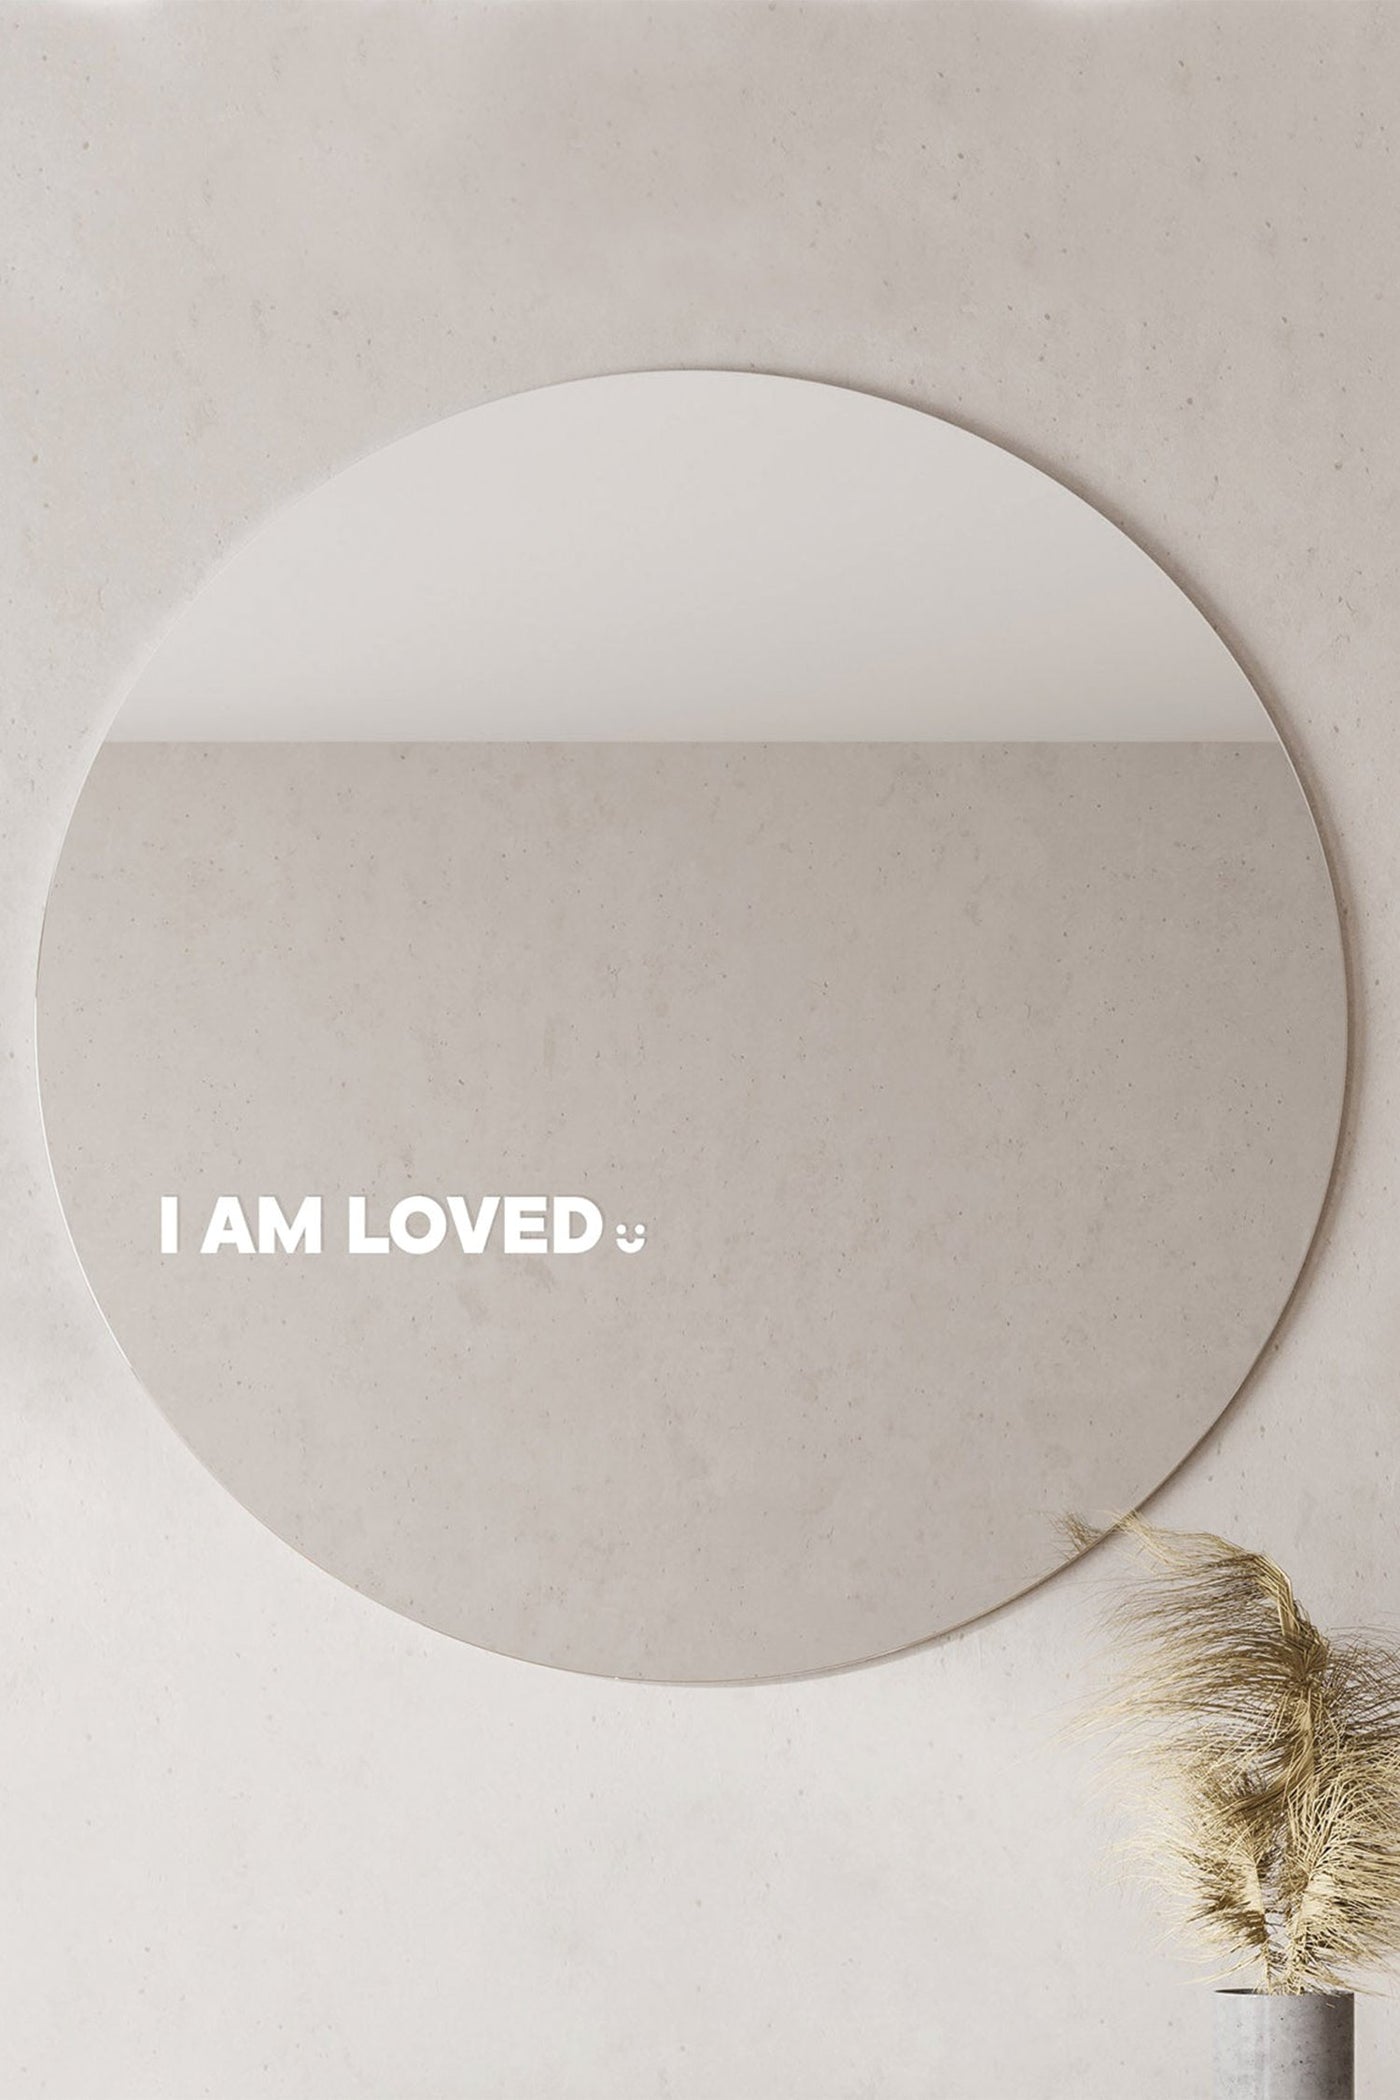 I AM LOVED. - Affirmation Mirror Sticker Affirmation Stickers Selfawear 